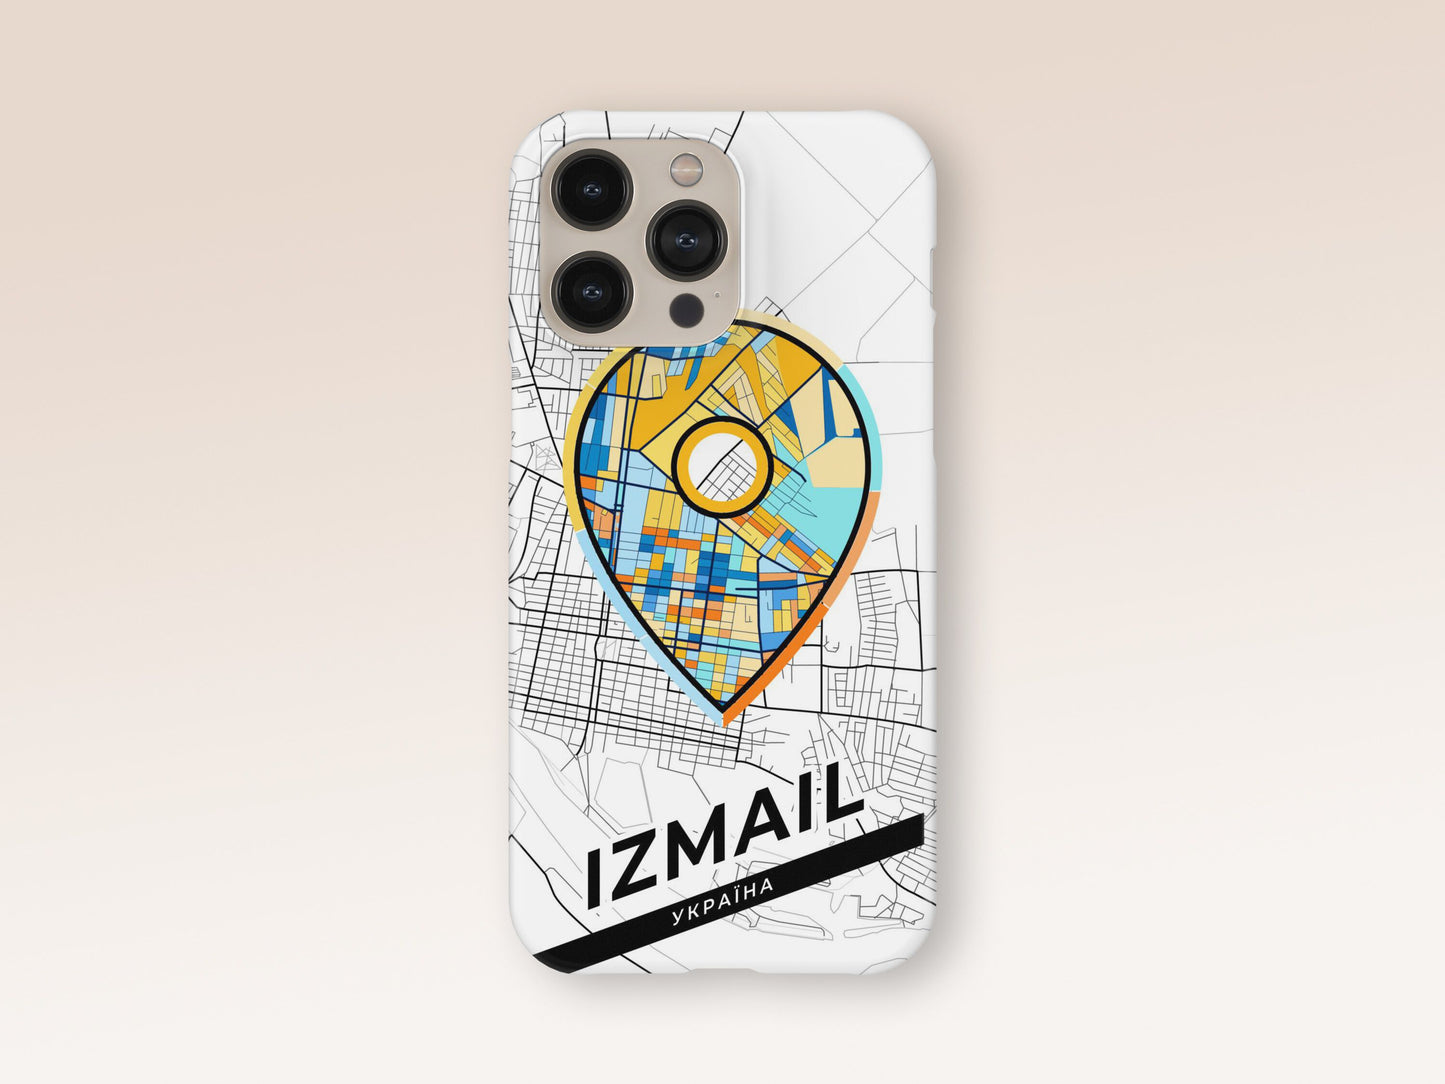 Izmail Ukraine slim phone case with colorful icon. Birthday, wedding or housewarming gift. Couple match cases. 1